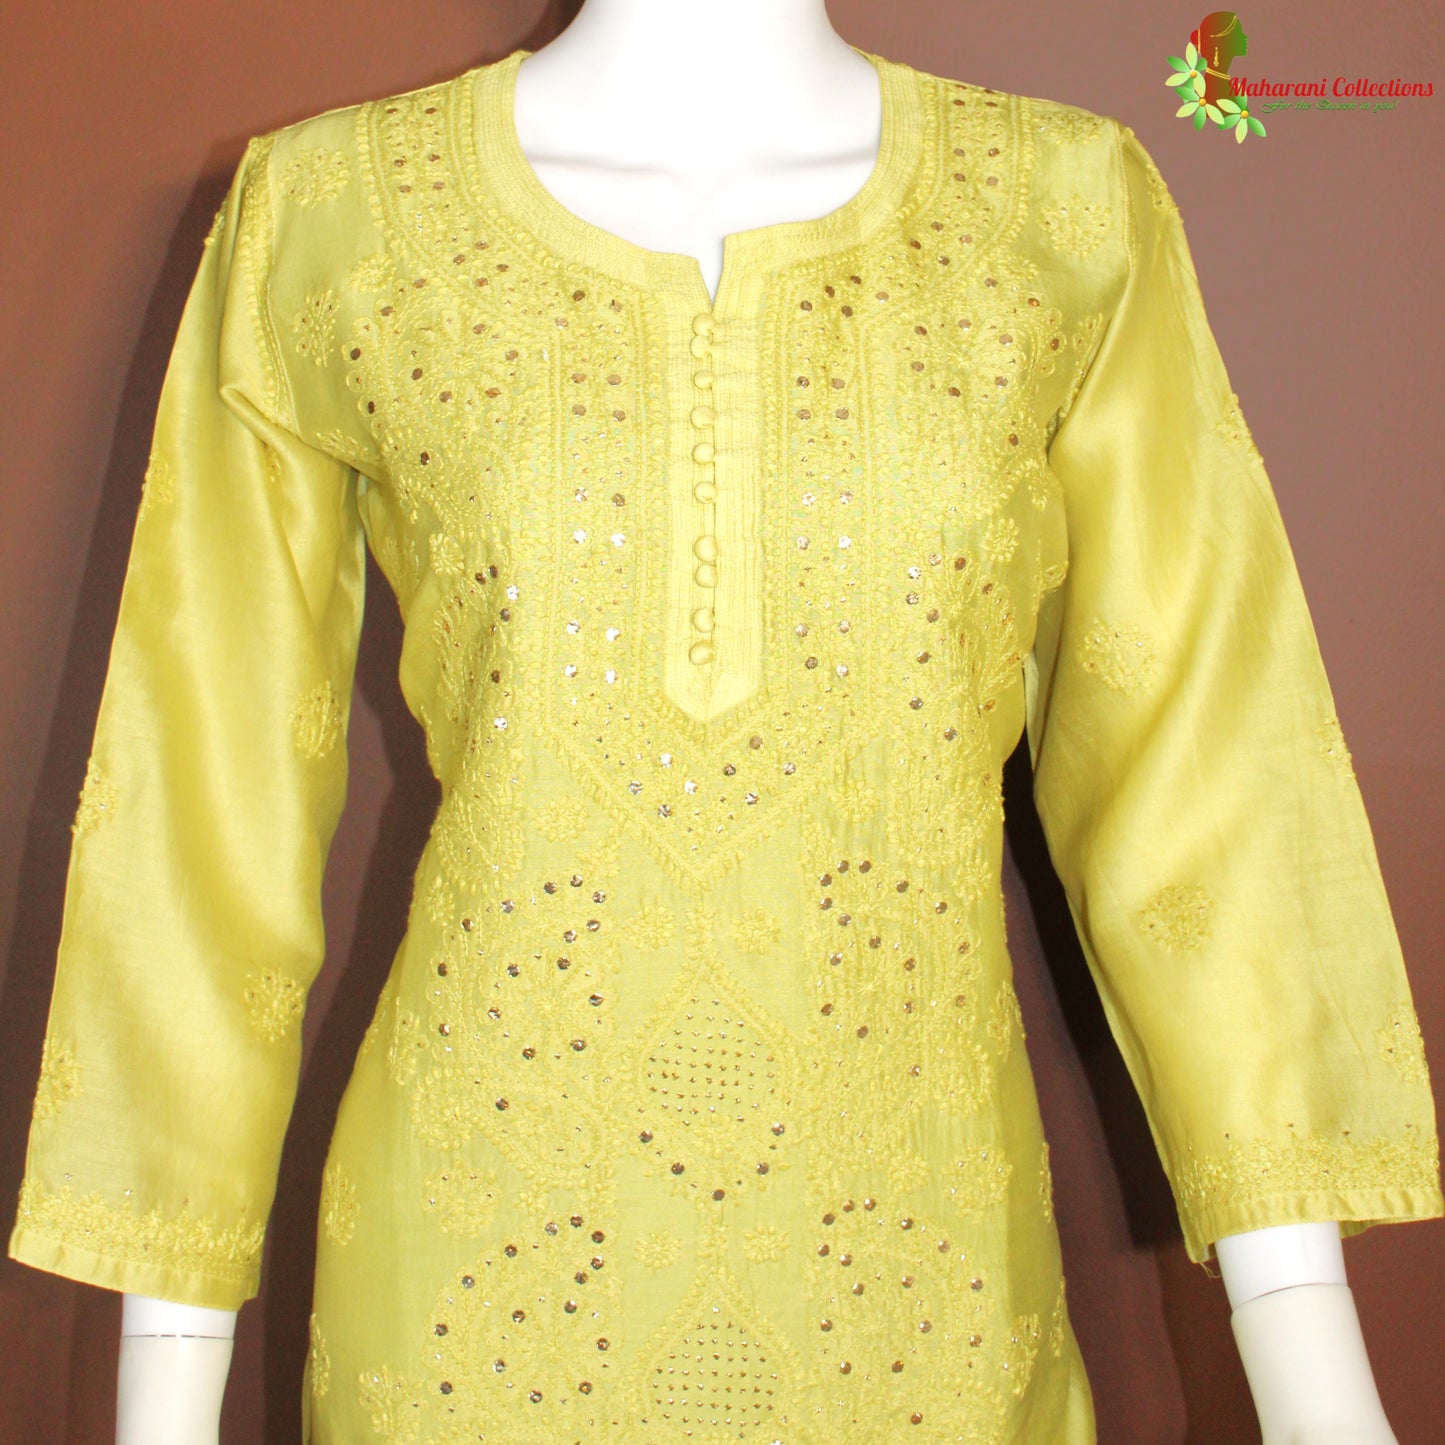 Maharani's Chanderi Silk Kurta Top - Dijon Yellow (L)